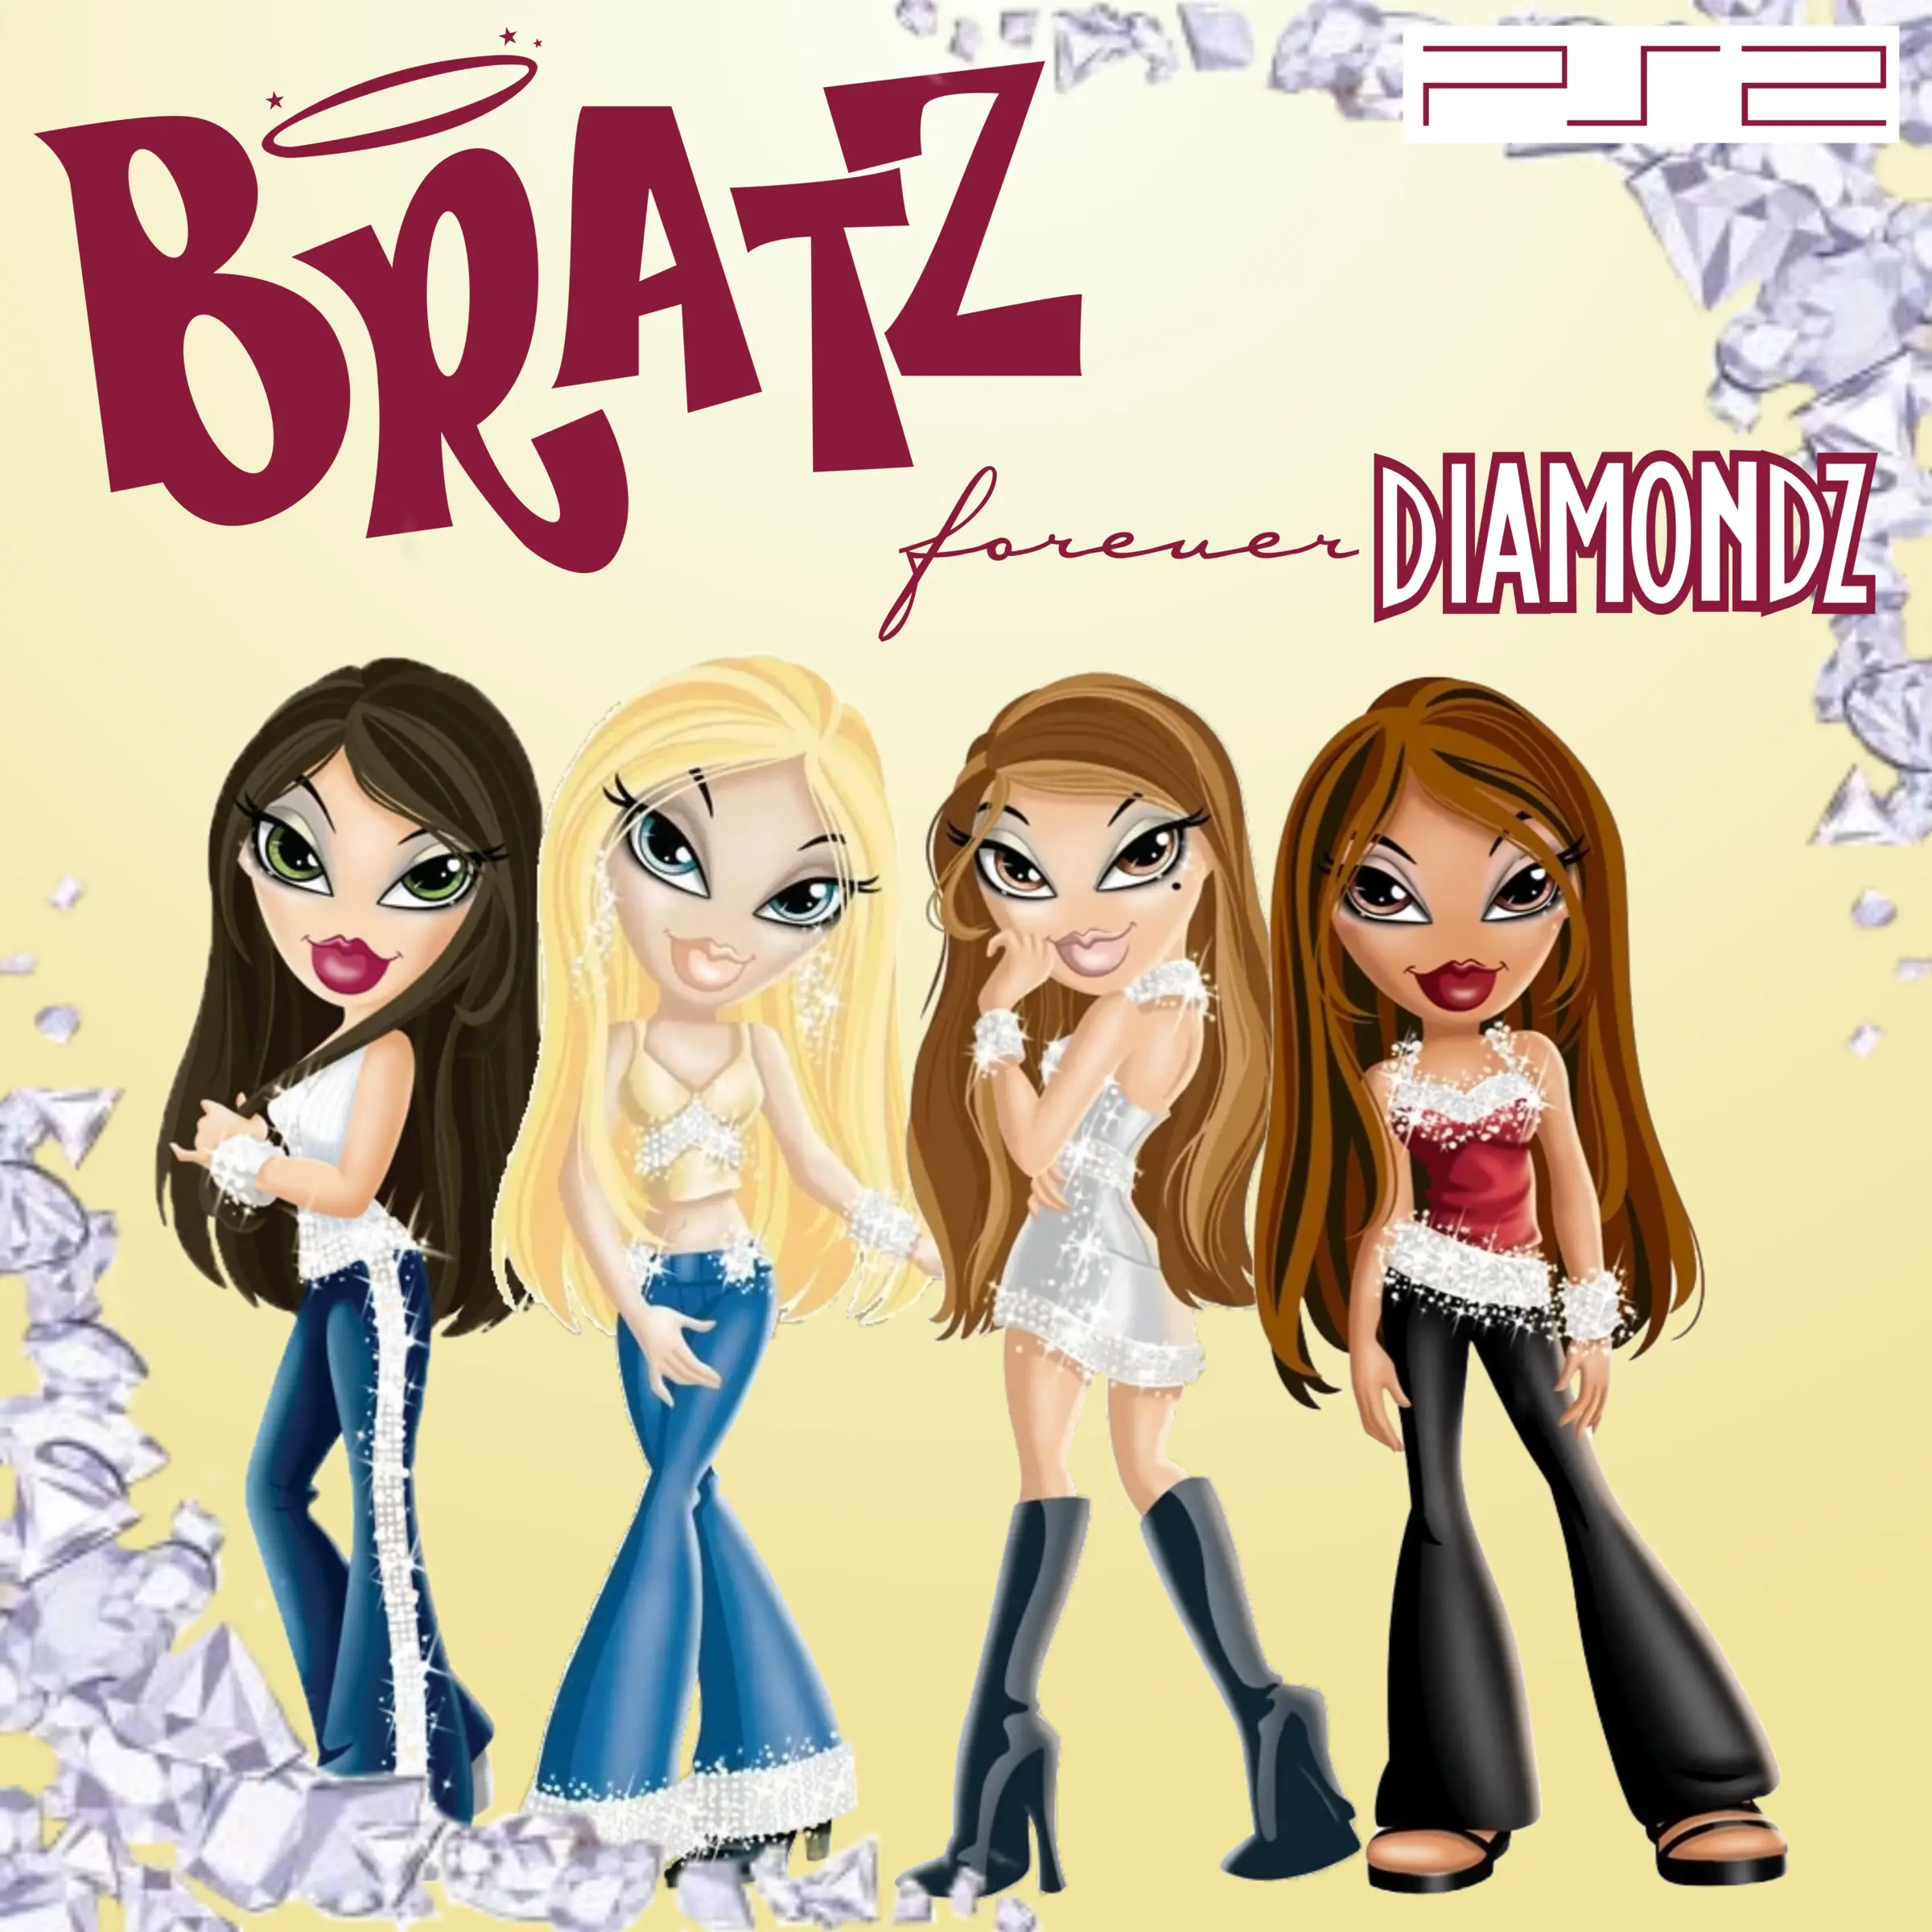 Button for Bratz: Forever Diamondz for PS2